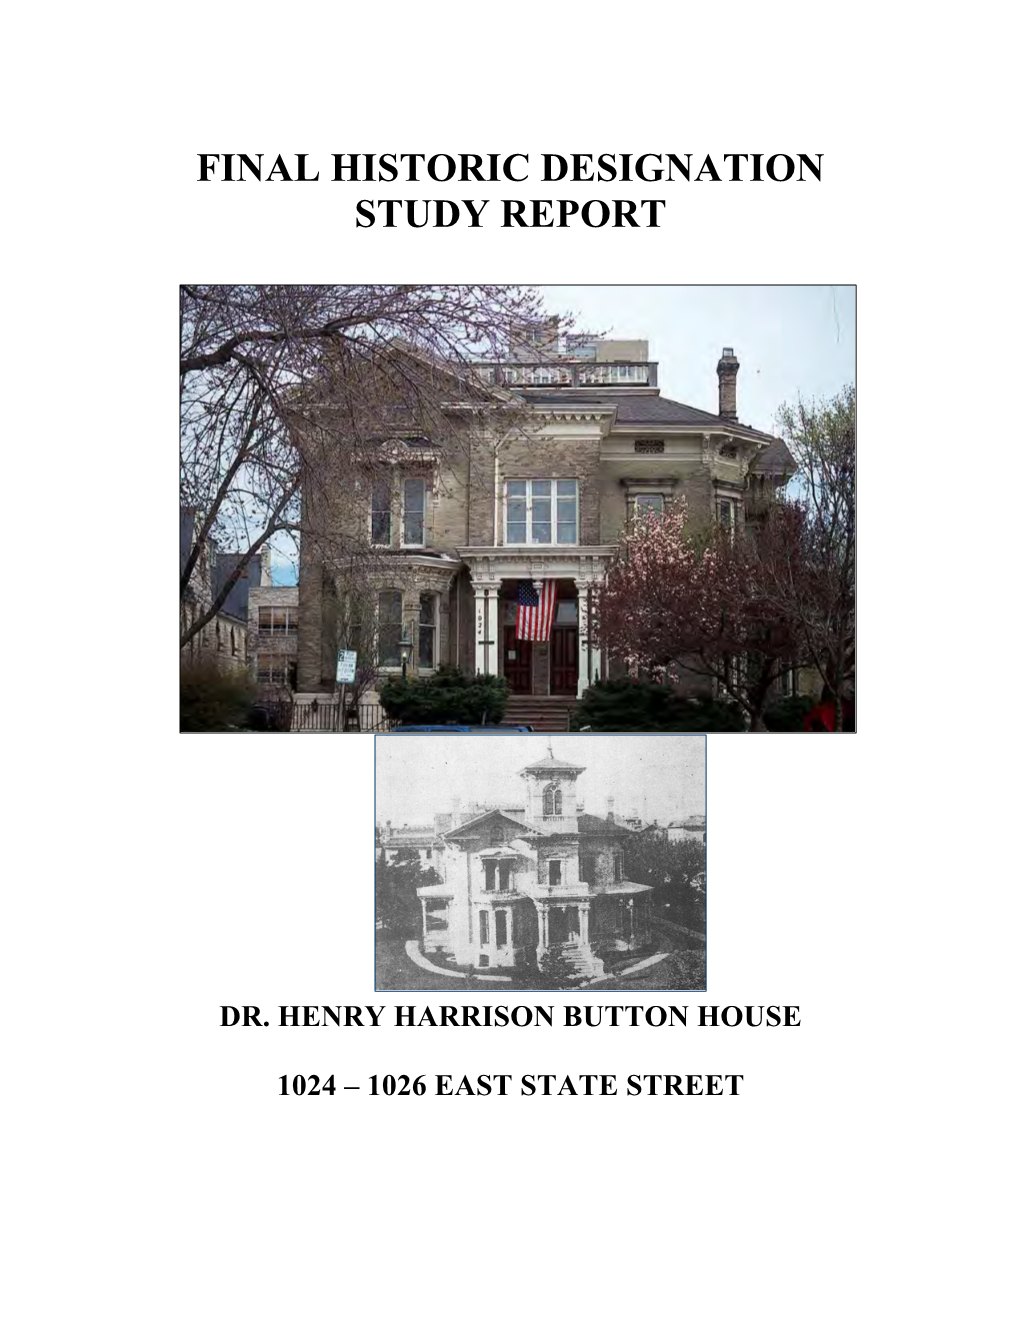 Final Historic Designation Study Report